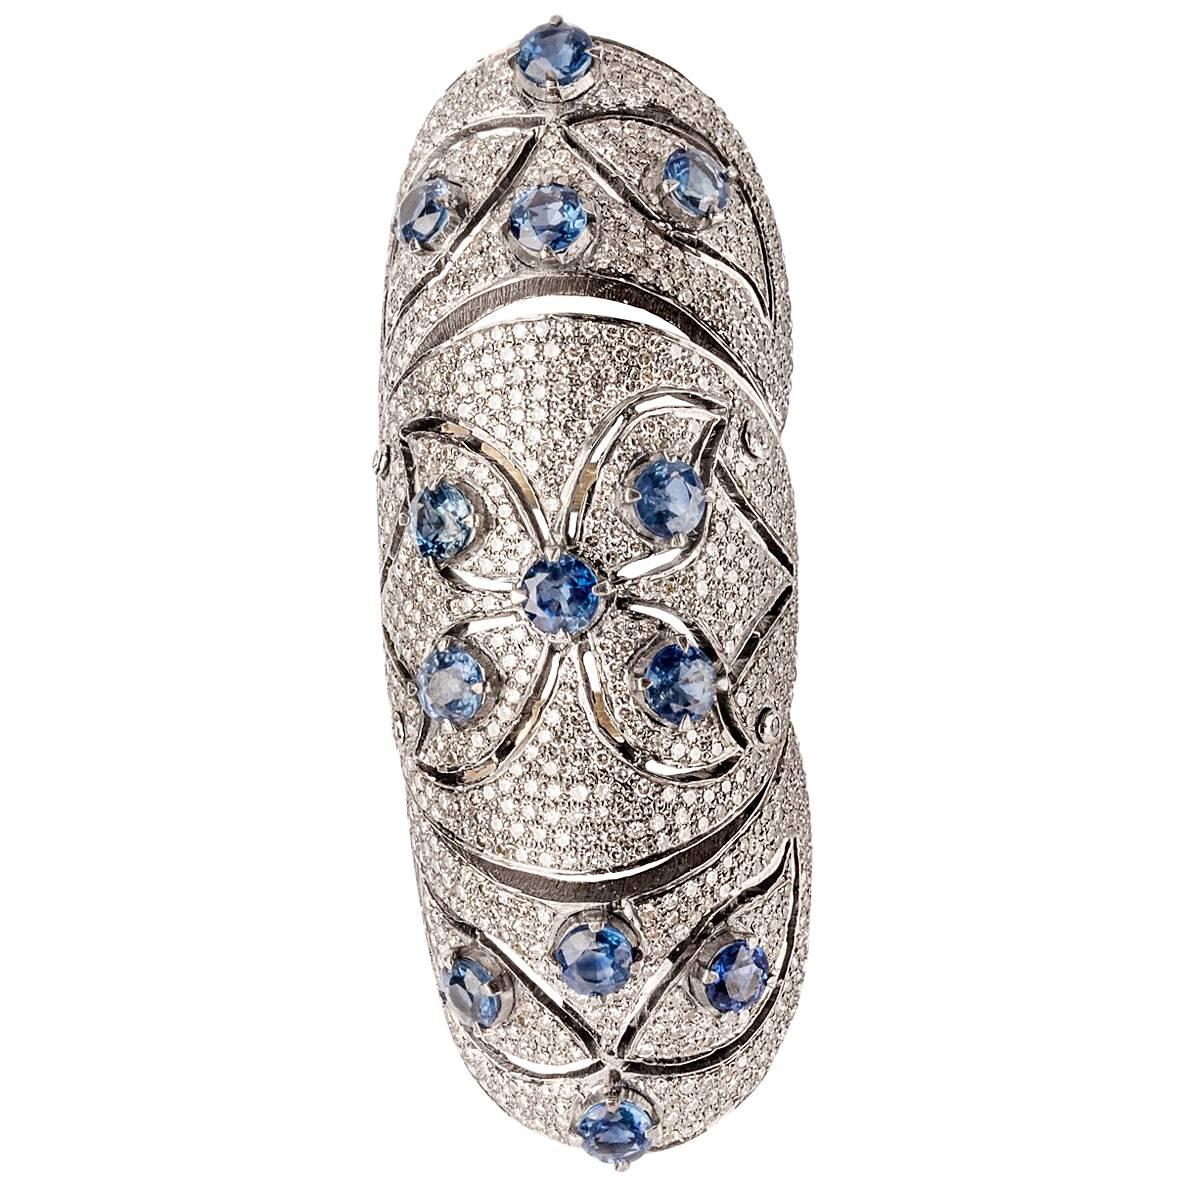 Clarissa Bronfman Sapphire and Diamond 'Gladiator' Ring